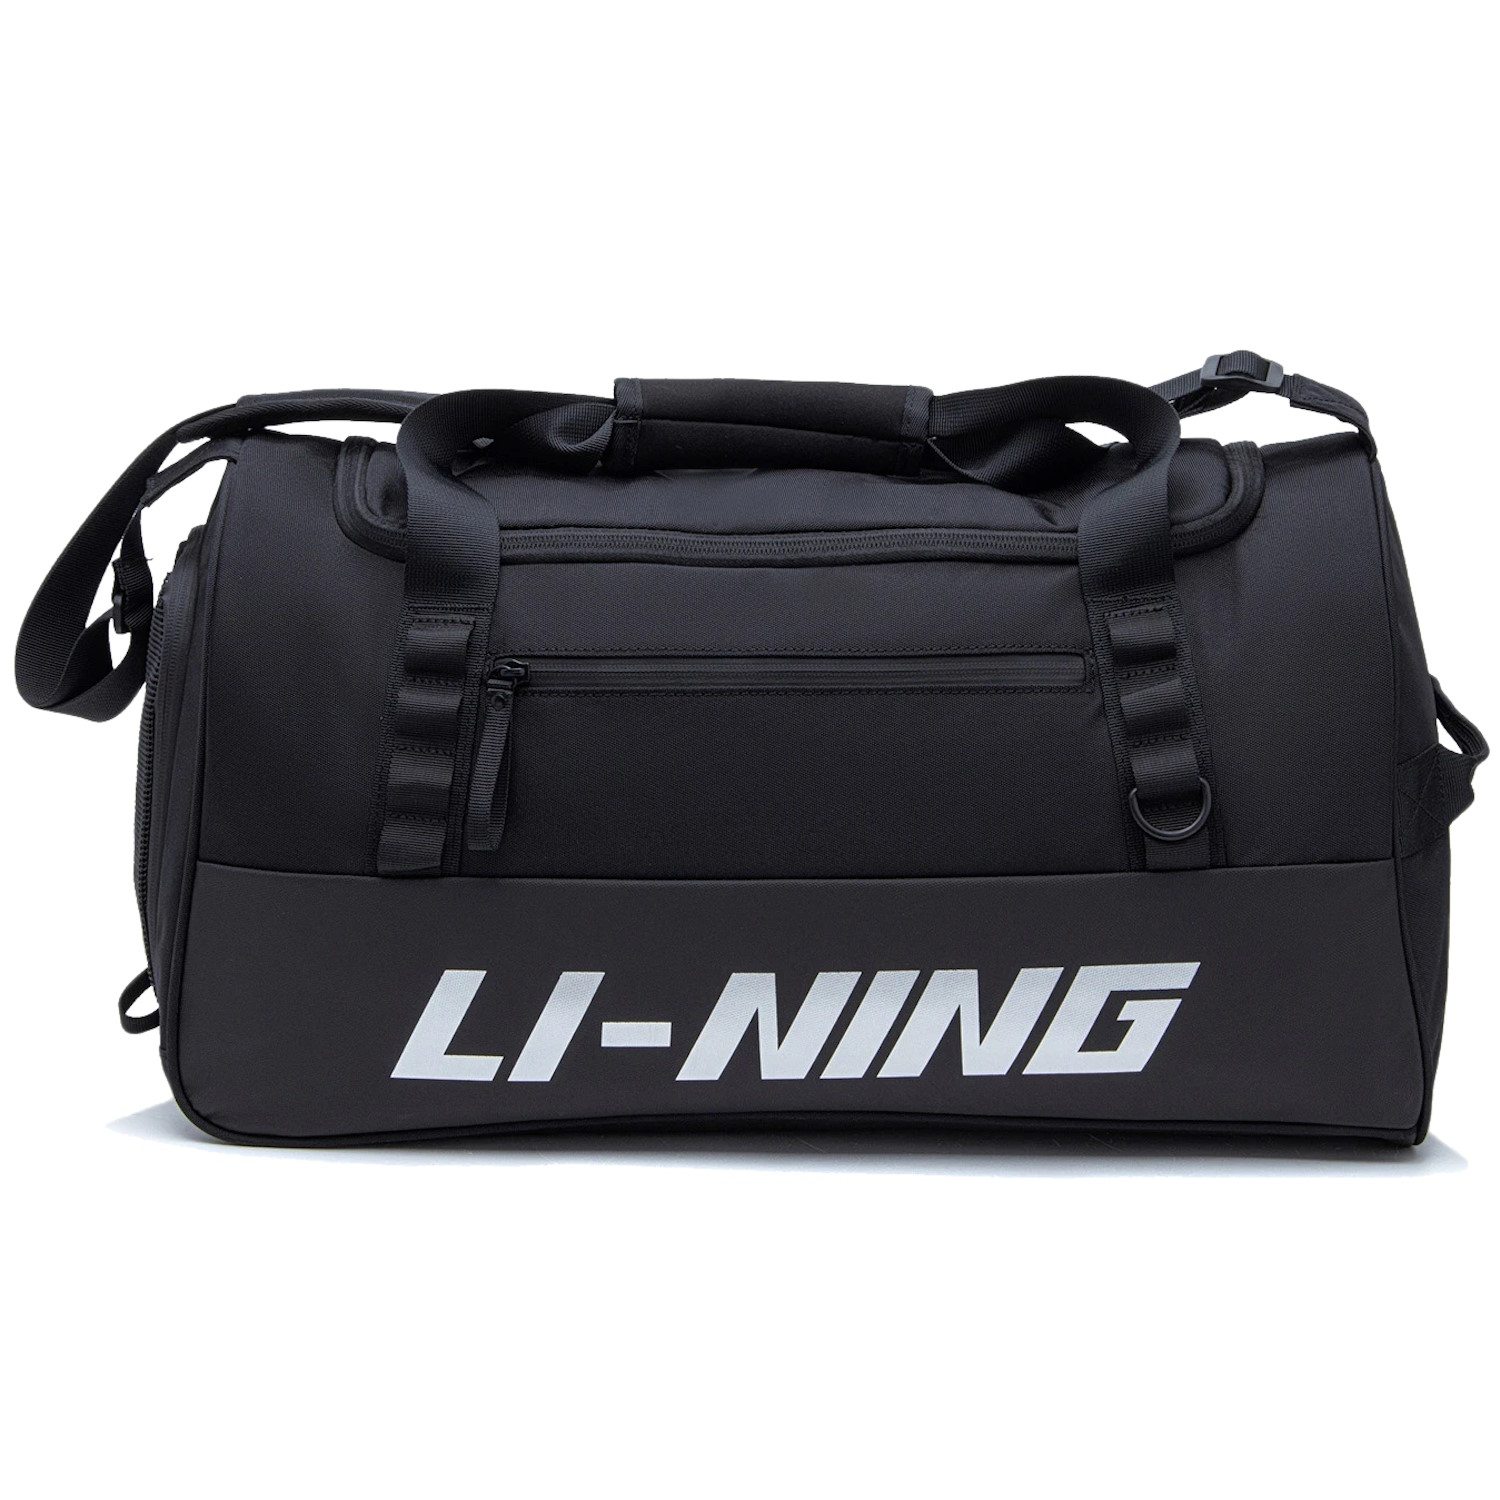 Сумка LI-NING Travel bag, черная